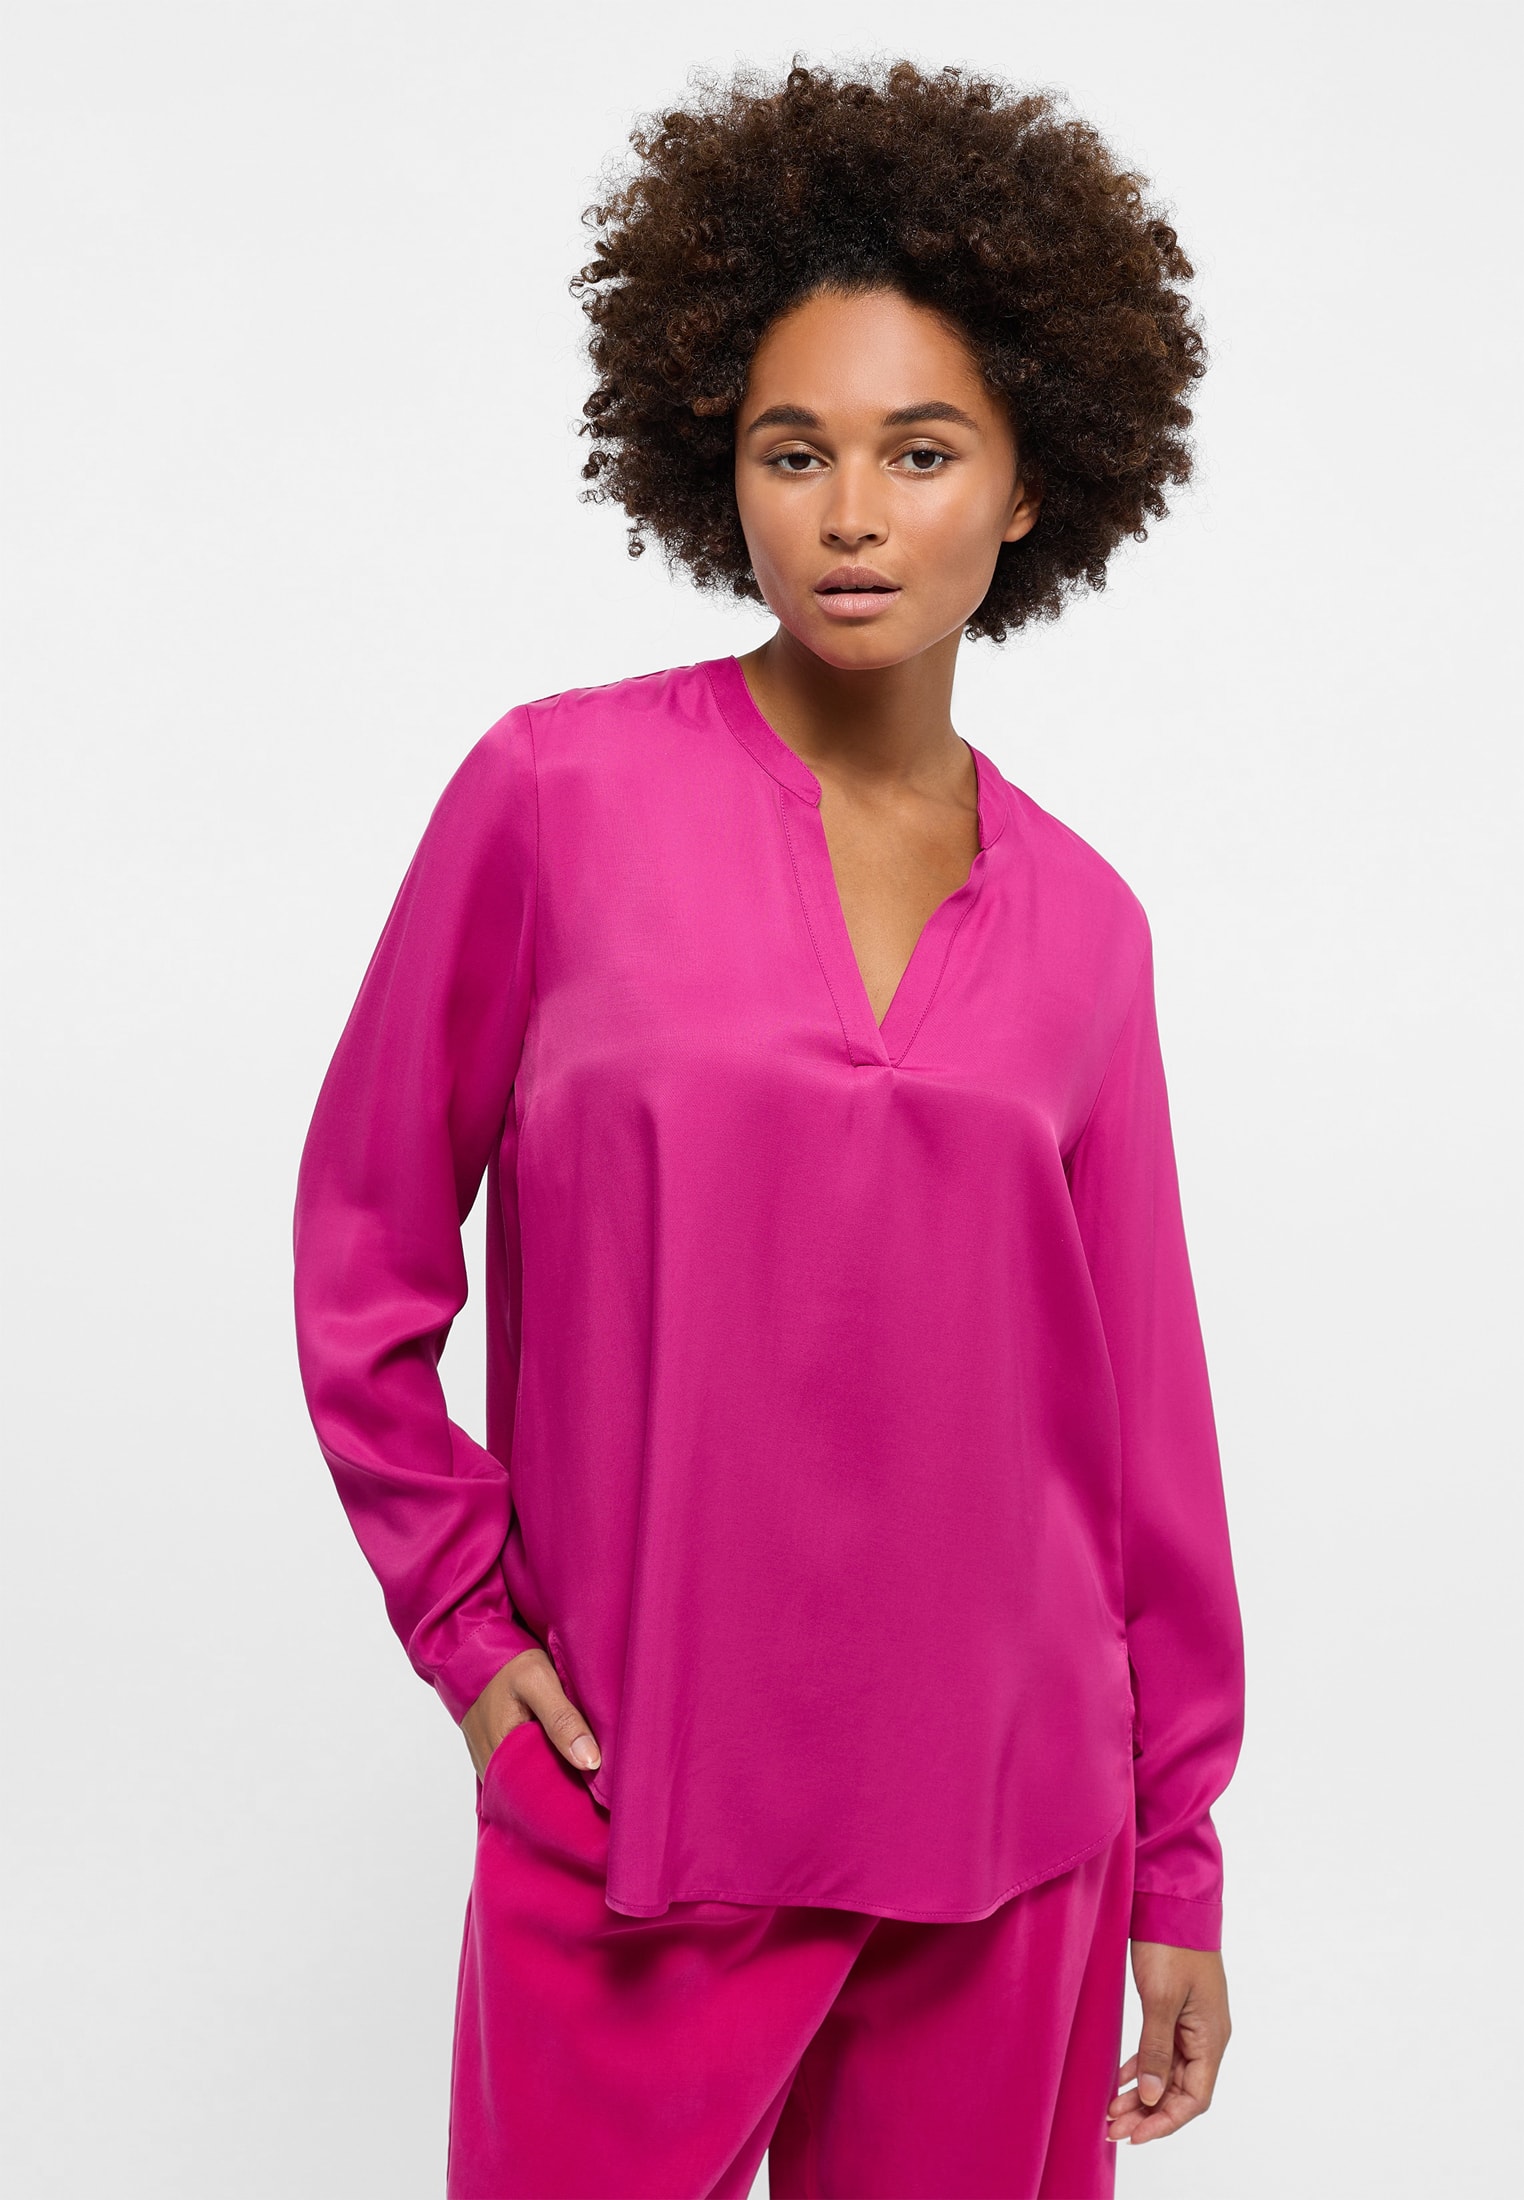 | in Bluse 38 pink | Langarm vibrant Viscose | 2BL00329-15-31-38-1/1 unifarben Shirt | pink vibrant